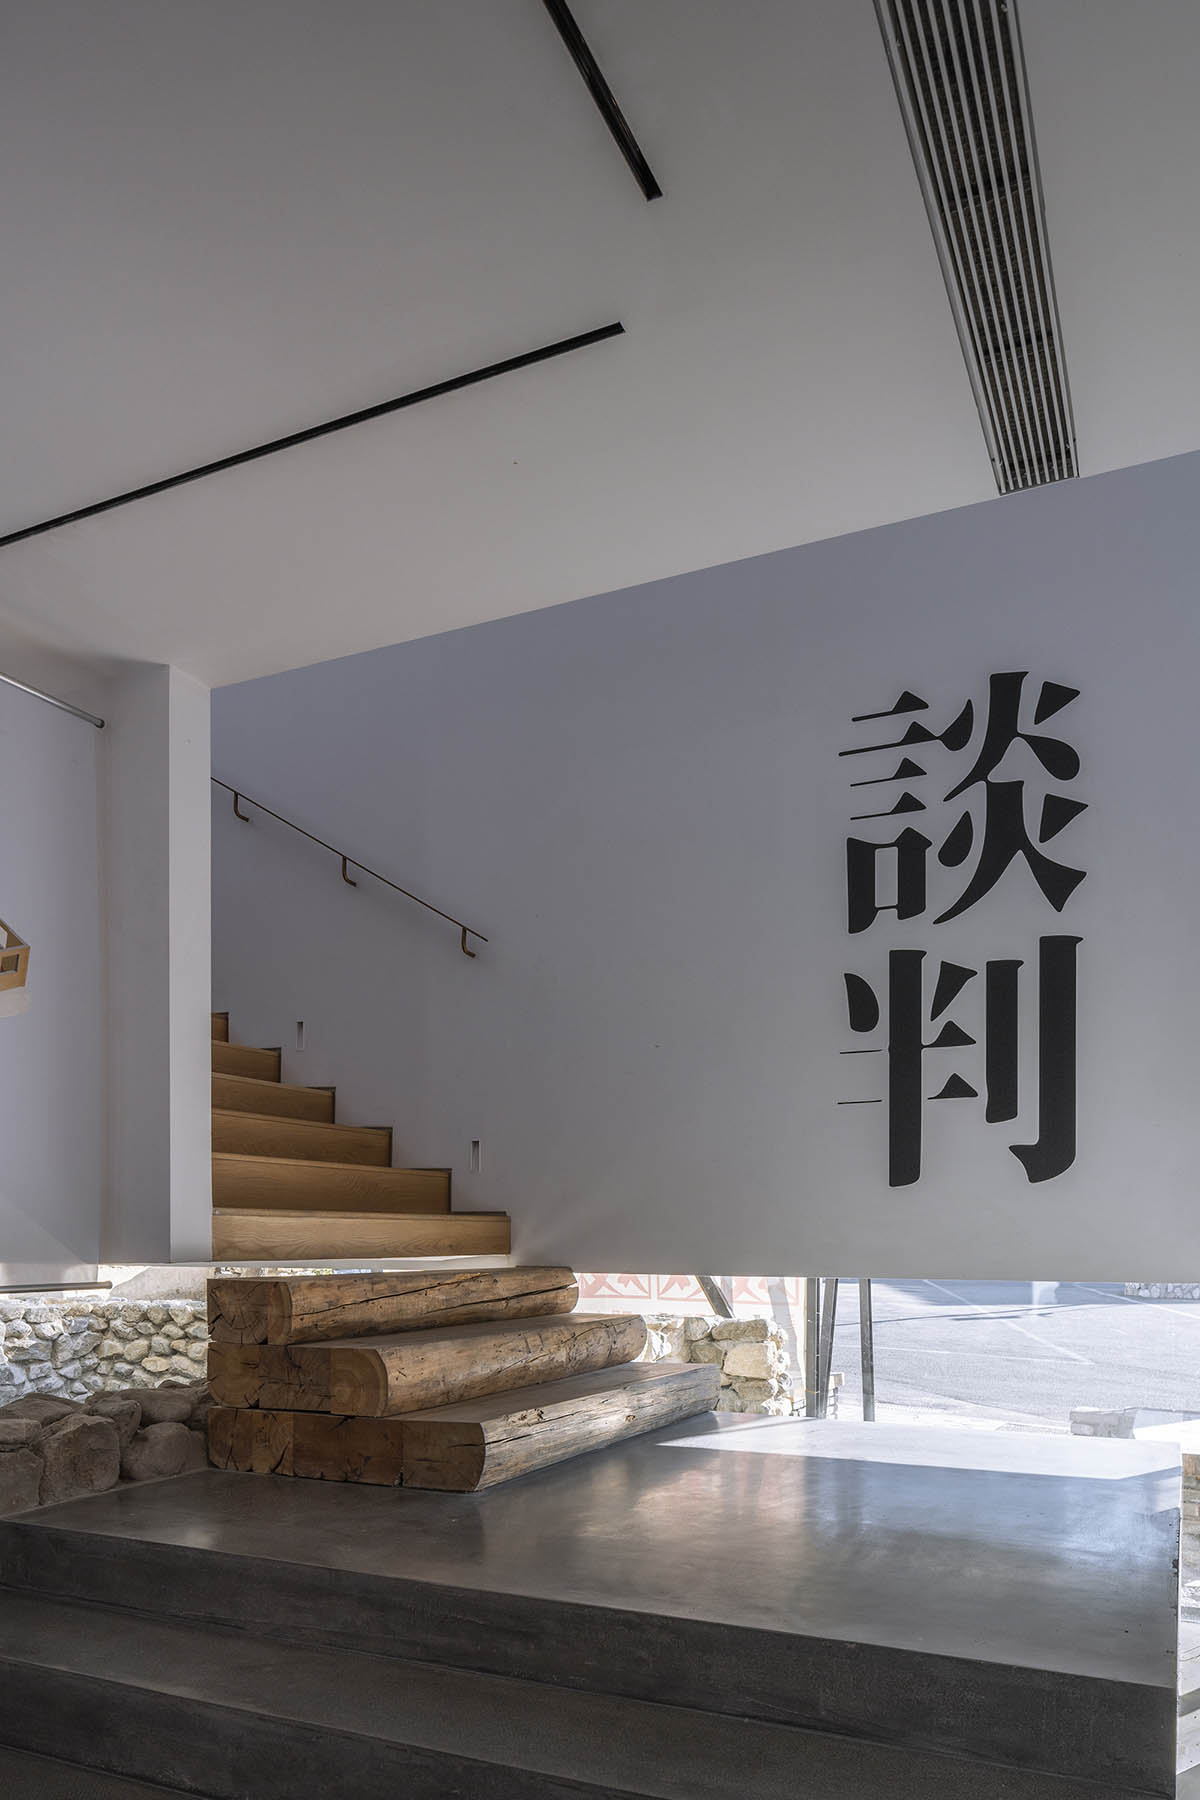 llLab. converts old house into an exhibition space, Village Opera, in rural Beigou Village, Beijing 